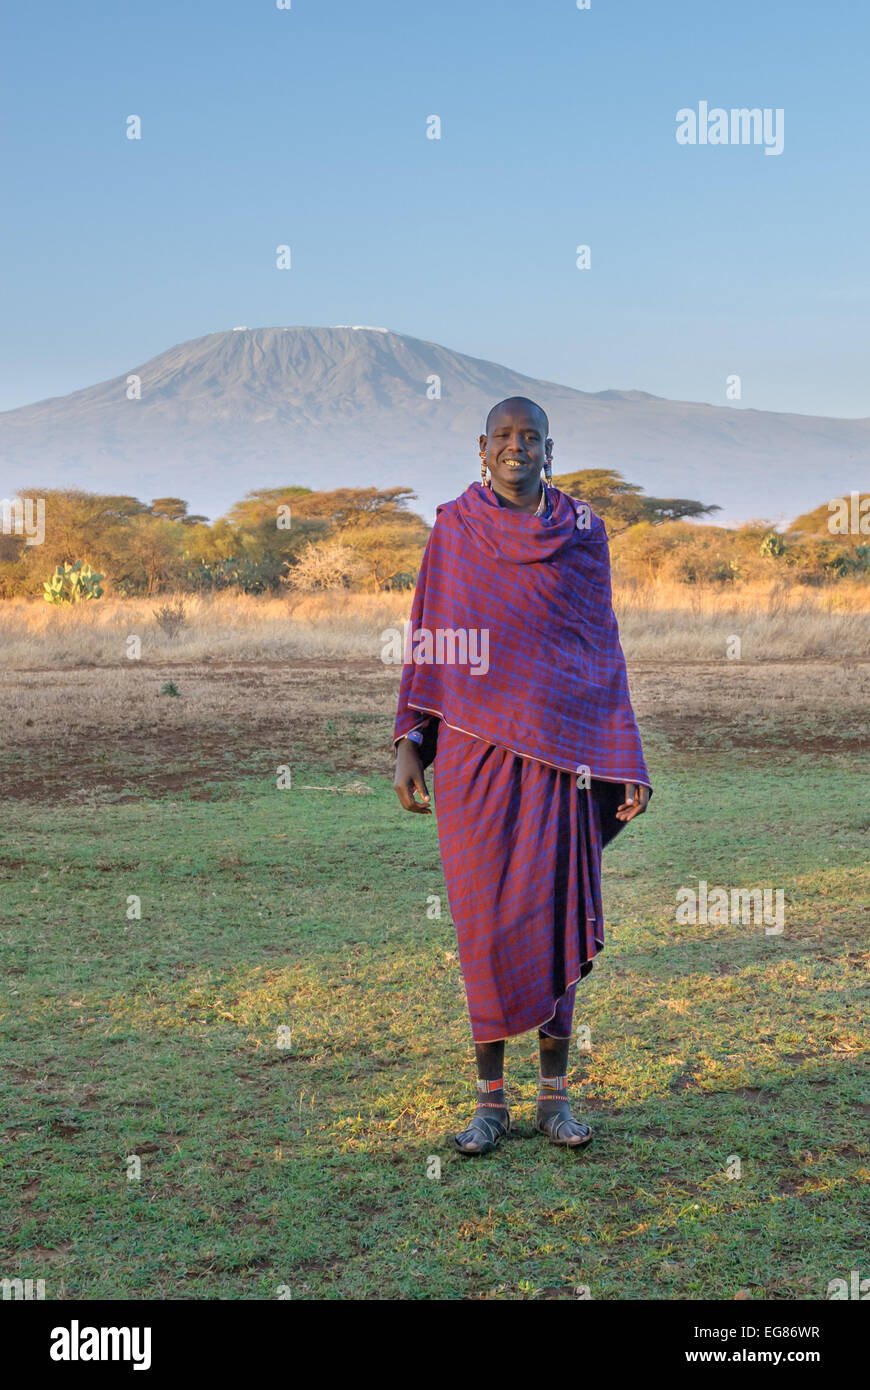 AMBOSELI, KENYA - September, 20: Young Masai man and Kilimanjaro mountain at backdrop on September, 20, 2008 in Amboseli Nationa Stock Photo